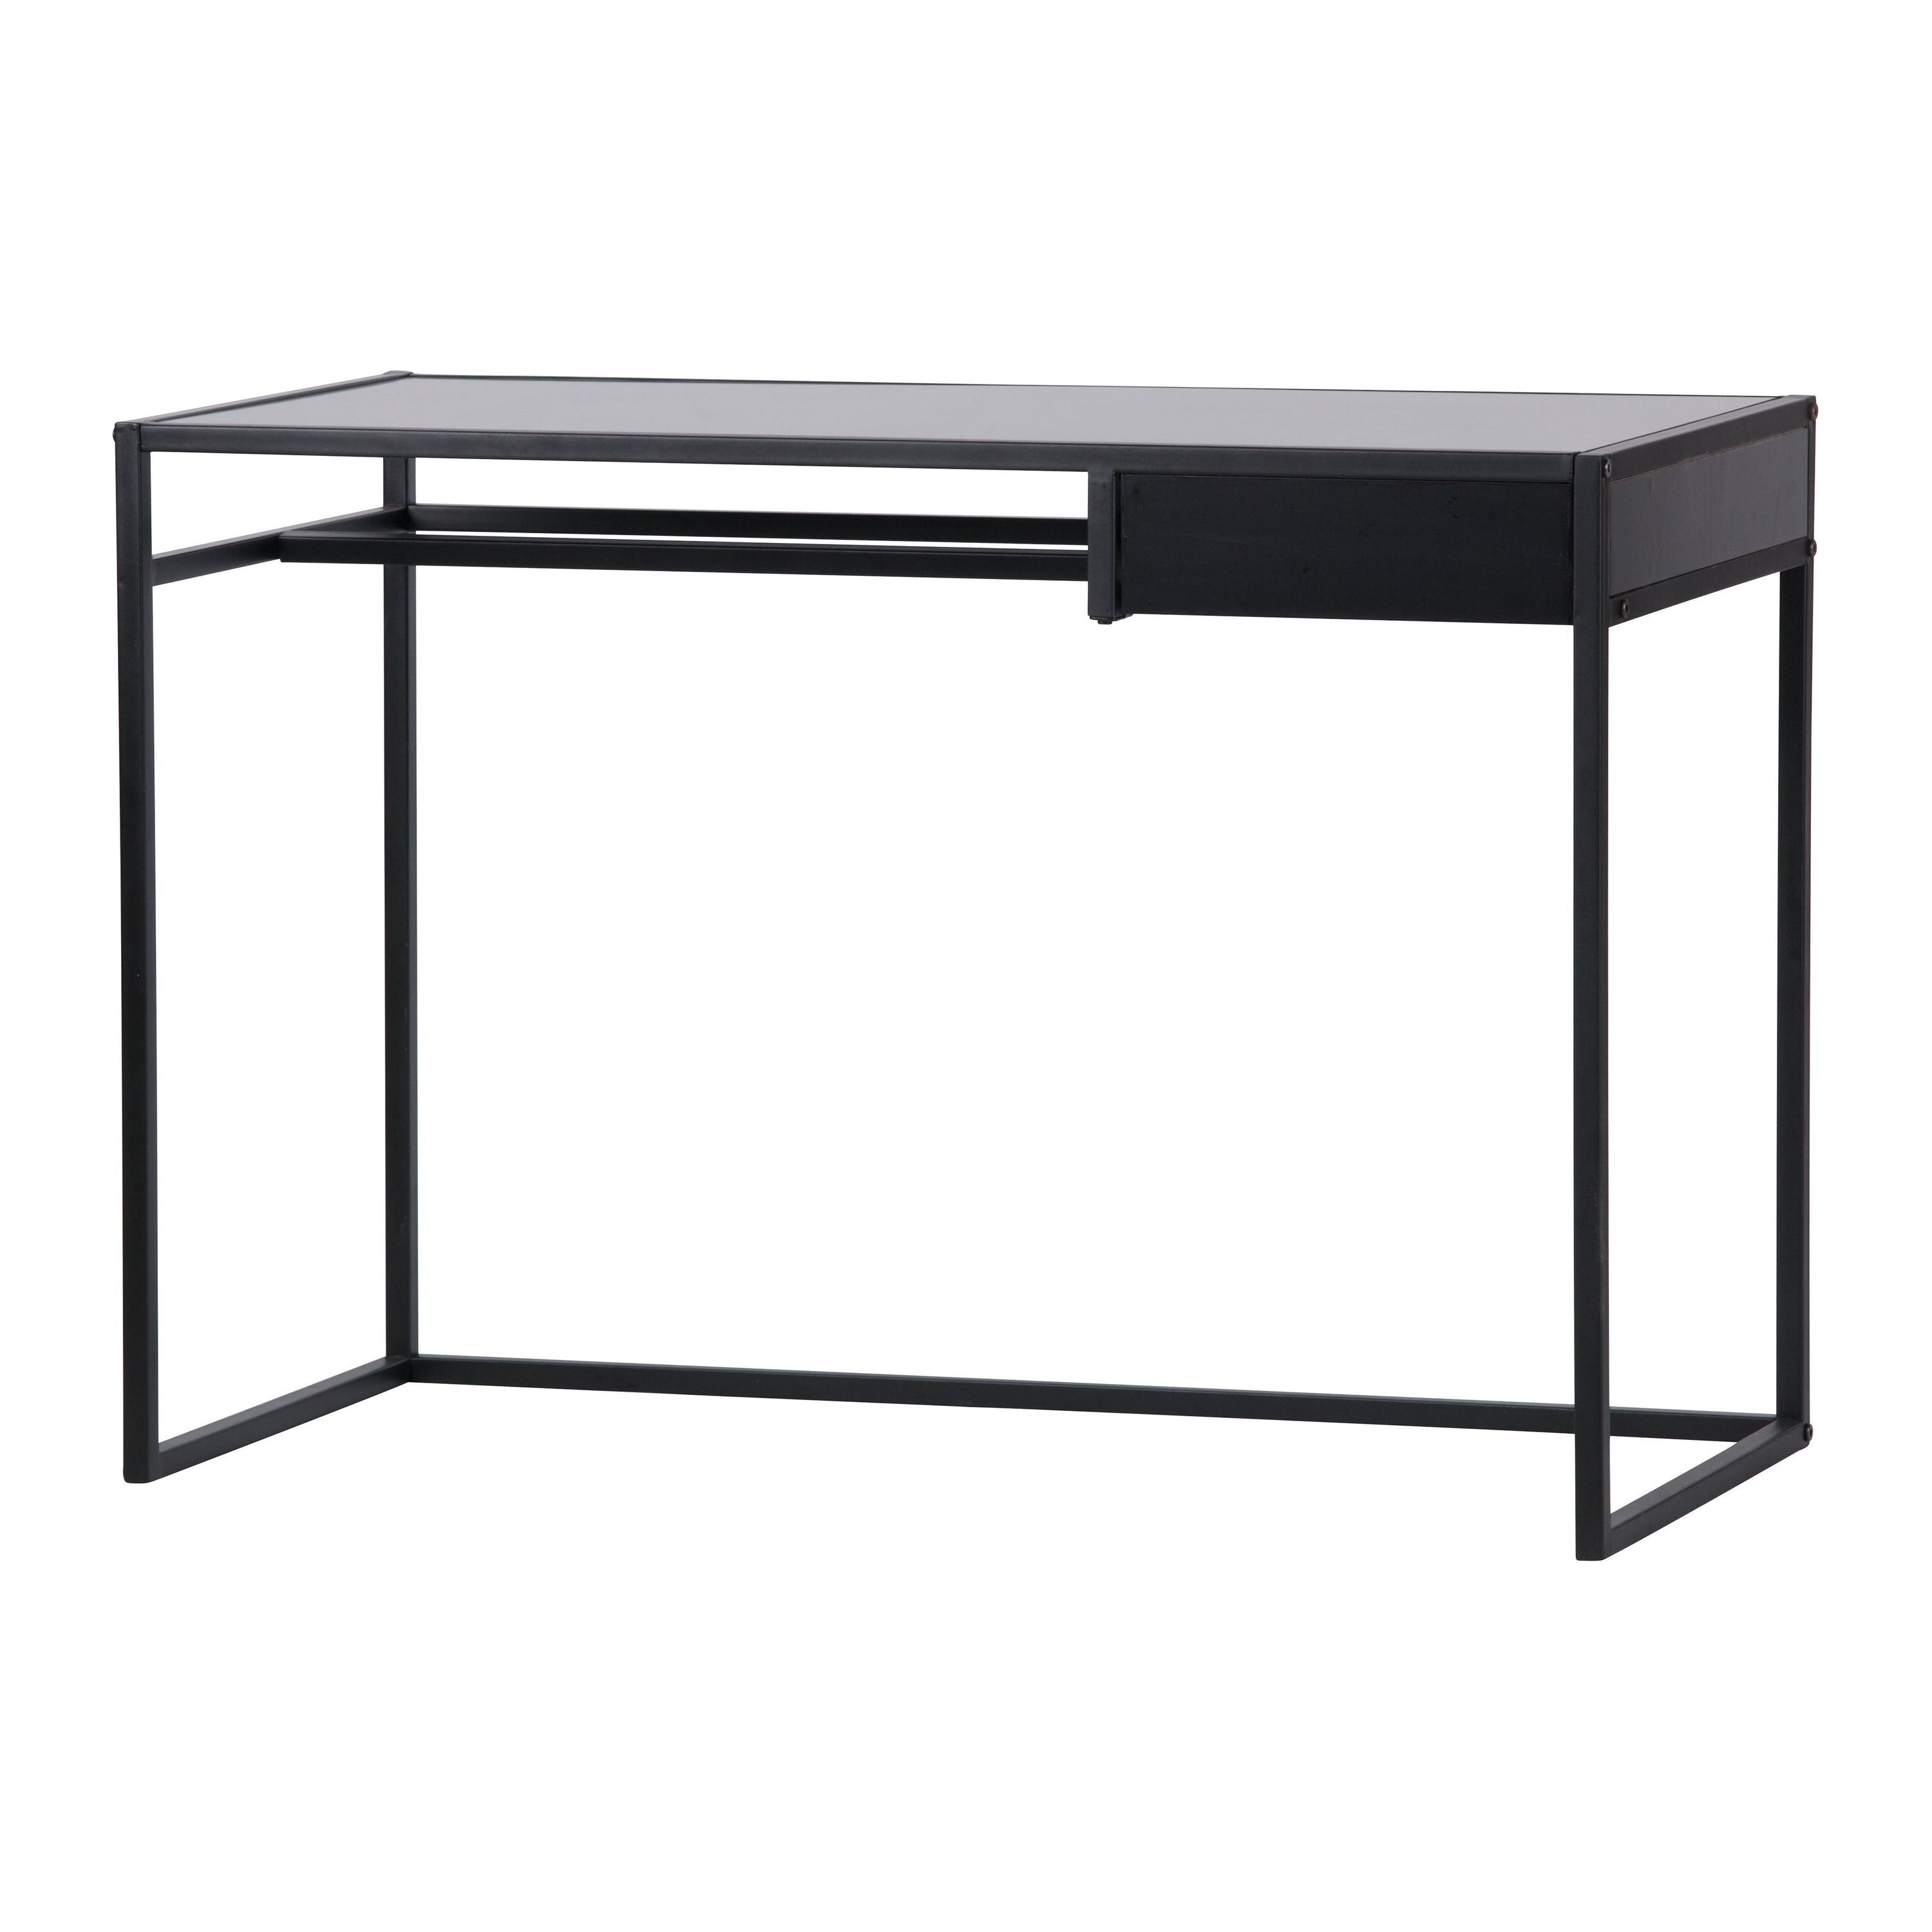 "TEUN" rašomasis stalas, juoda spalva, metalas